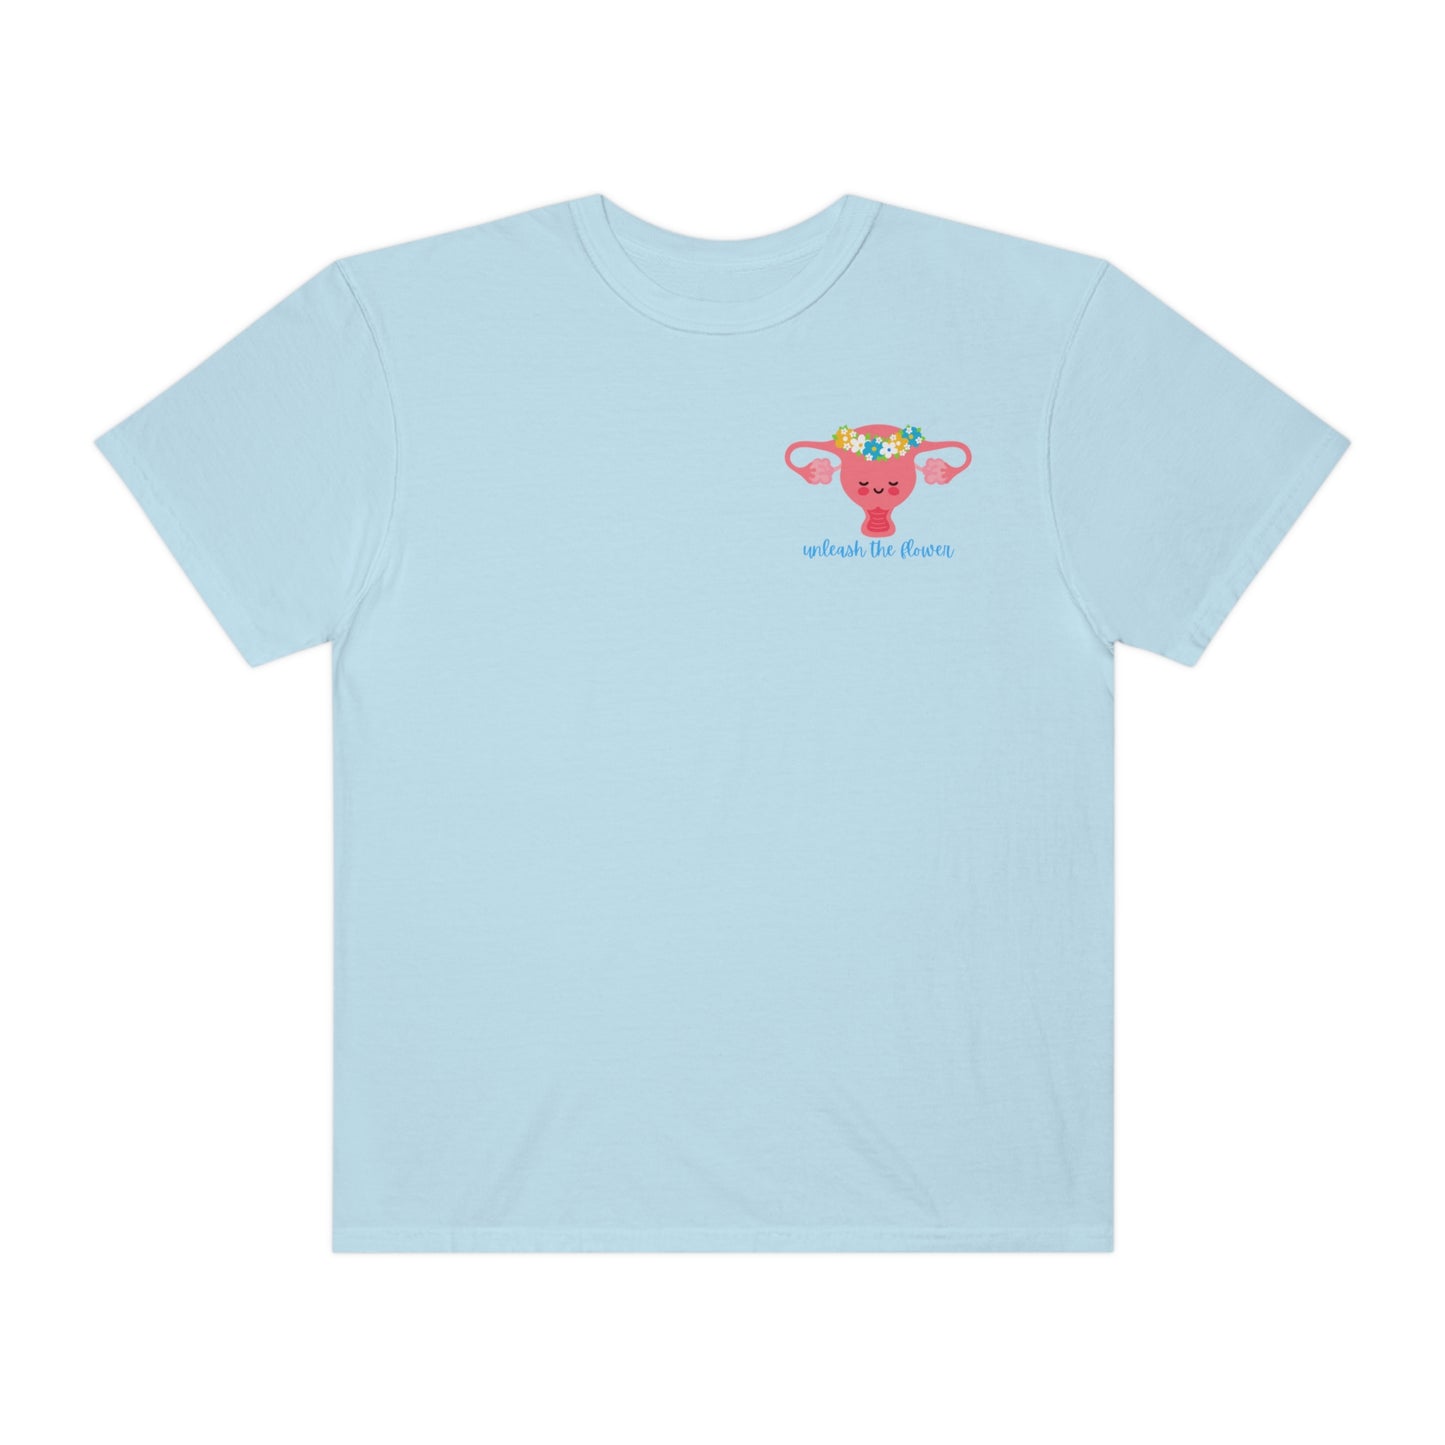 Unleash the Flower Ovary T-Shirt, Gift for OBGYN, Mother Baby Nurse Shirt, Funny Nurse Shirt, Woman Nurse Gift, Women Rights Tee